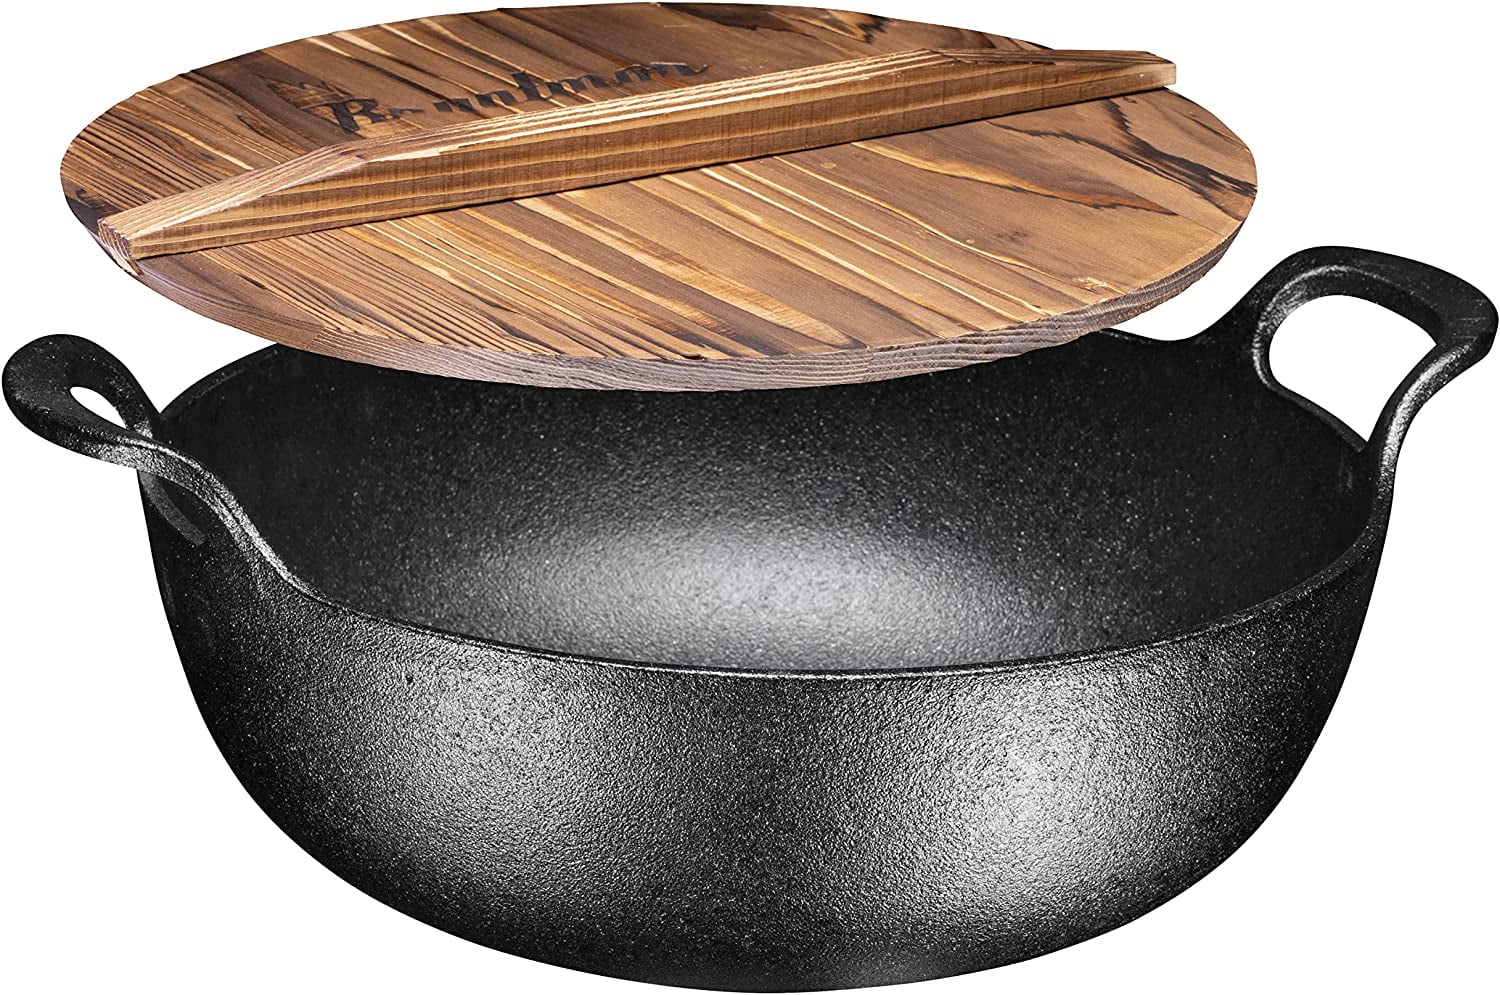 Bruntmor | Enameled Cast Iron Balti Dish With Wide Loop Handles 3 Quart Fire